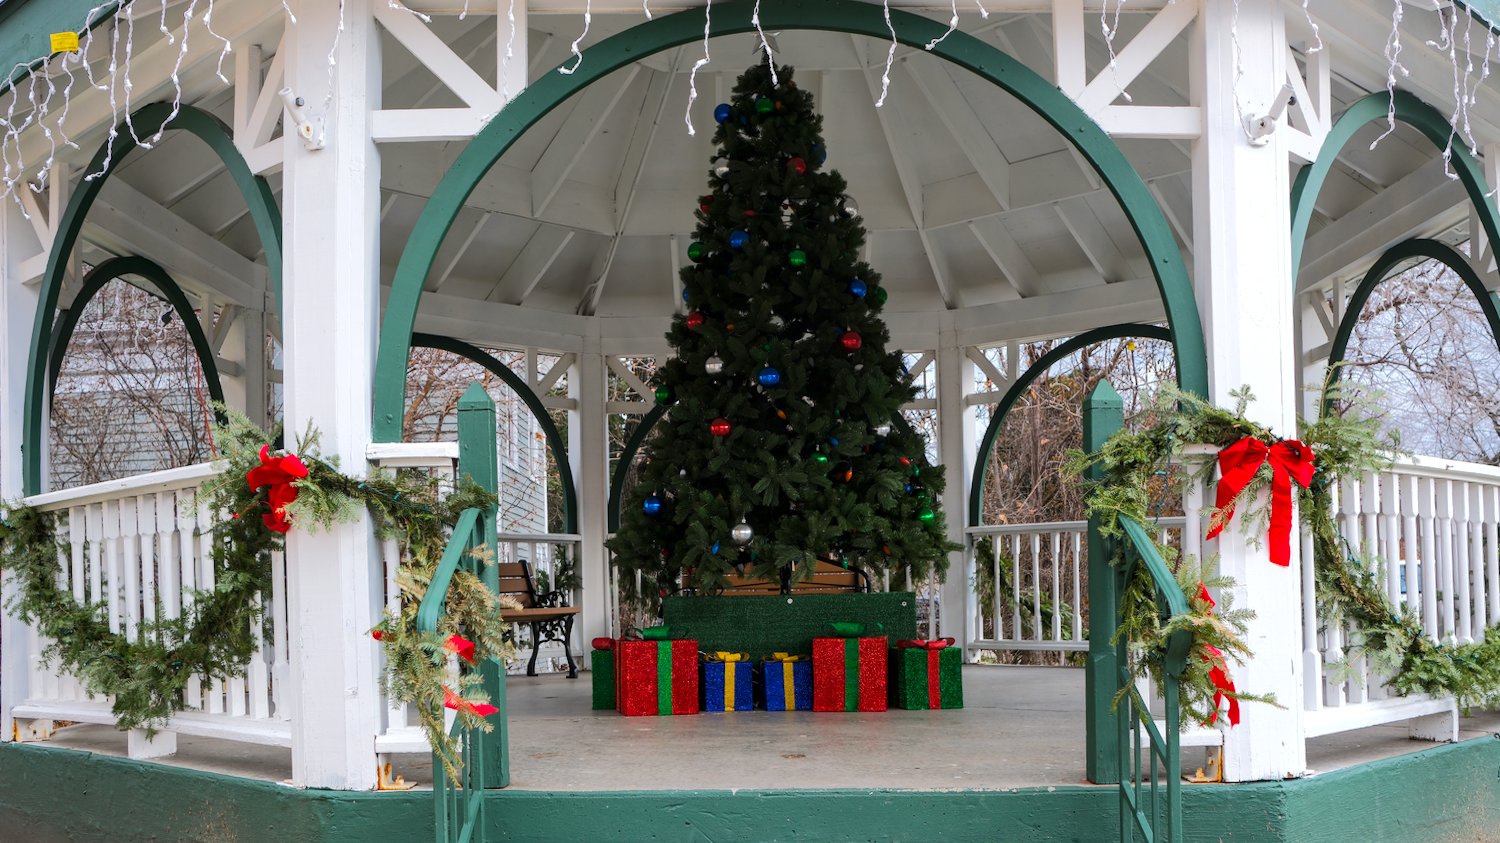 Village of Richmond's Christmas tree in the Gazebo at Stevens Park.